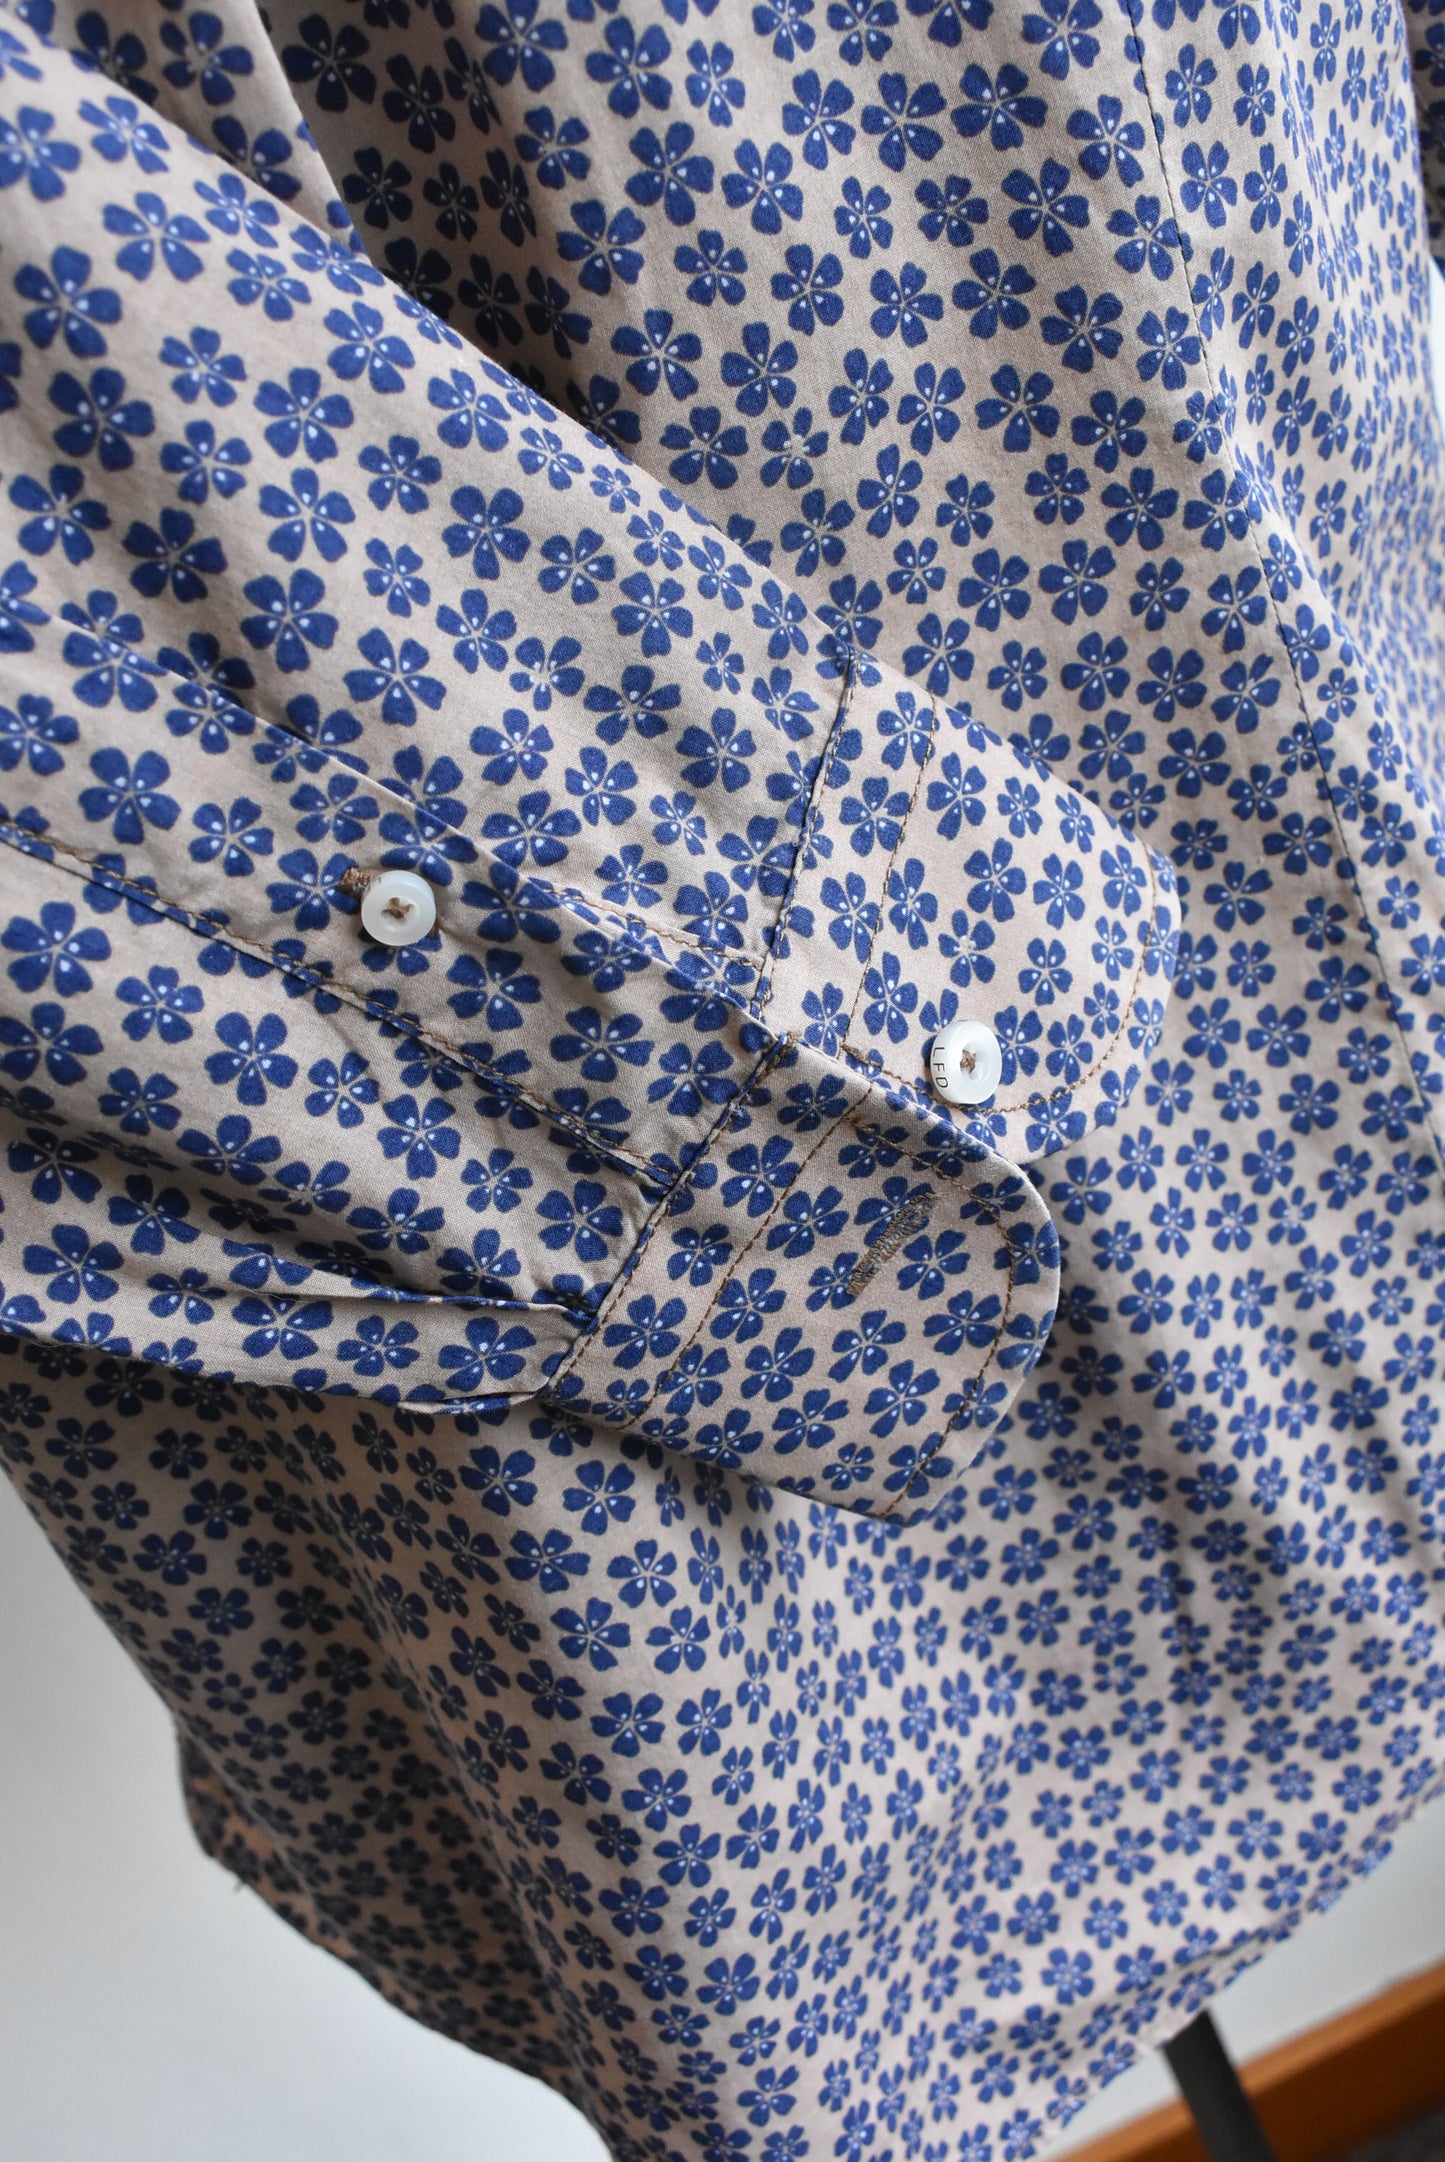 LFO floral printed mens shirt, size medium